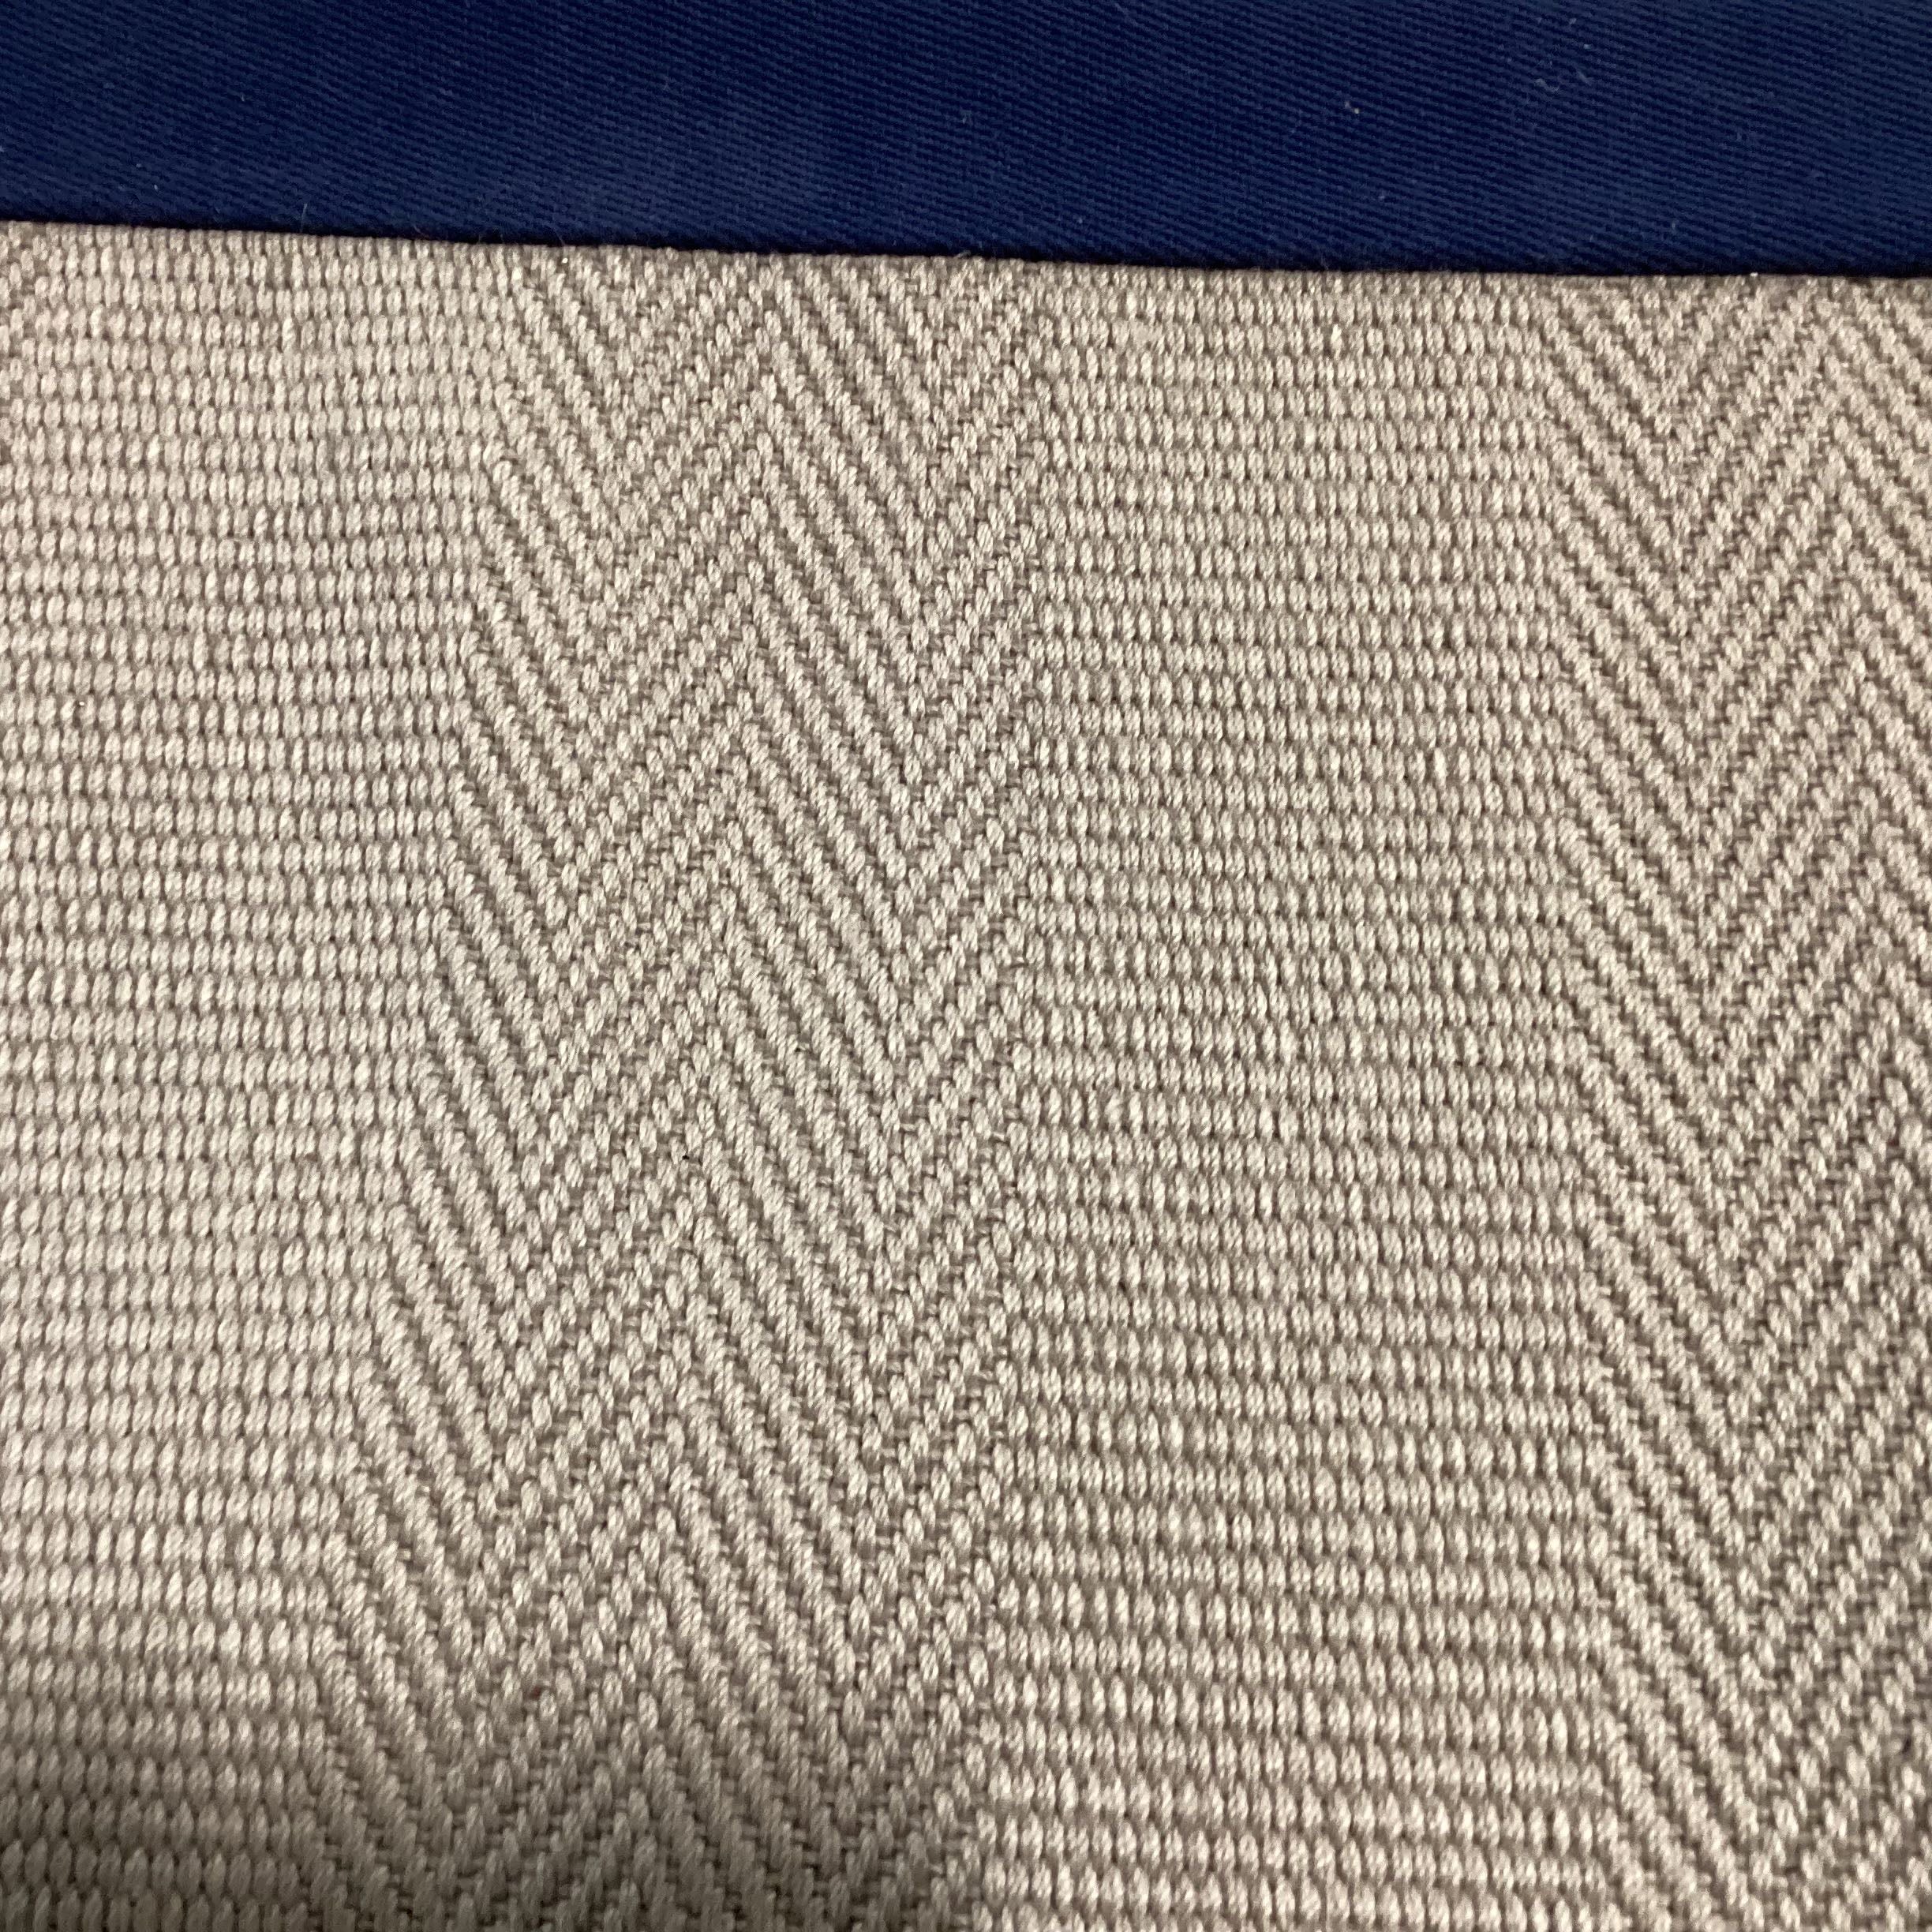 Natural Beige Wool Woven Blend Navy Canvas Border Rug